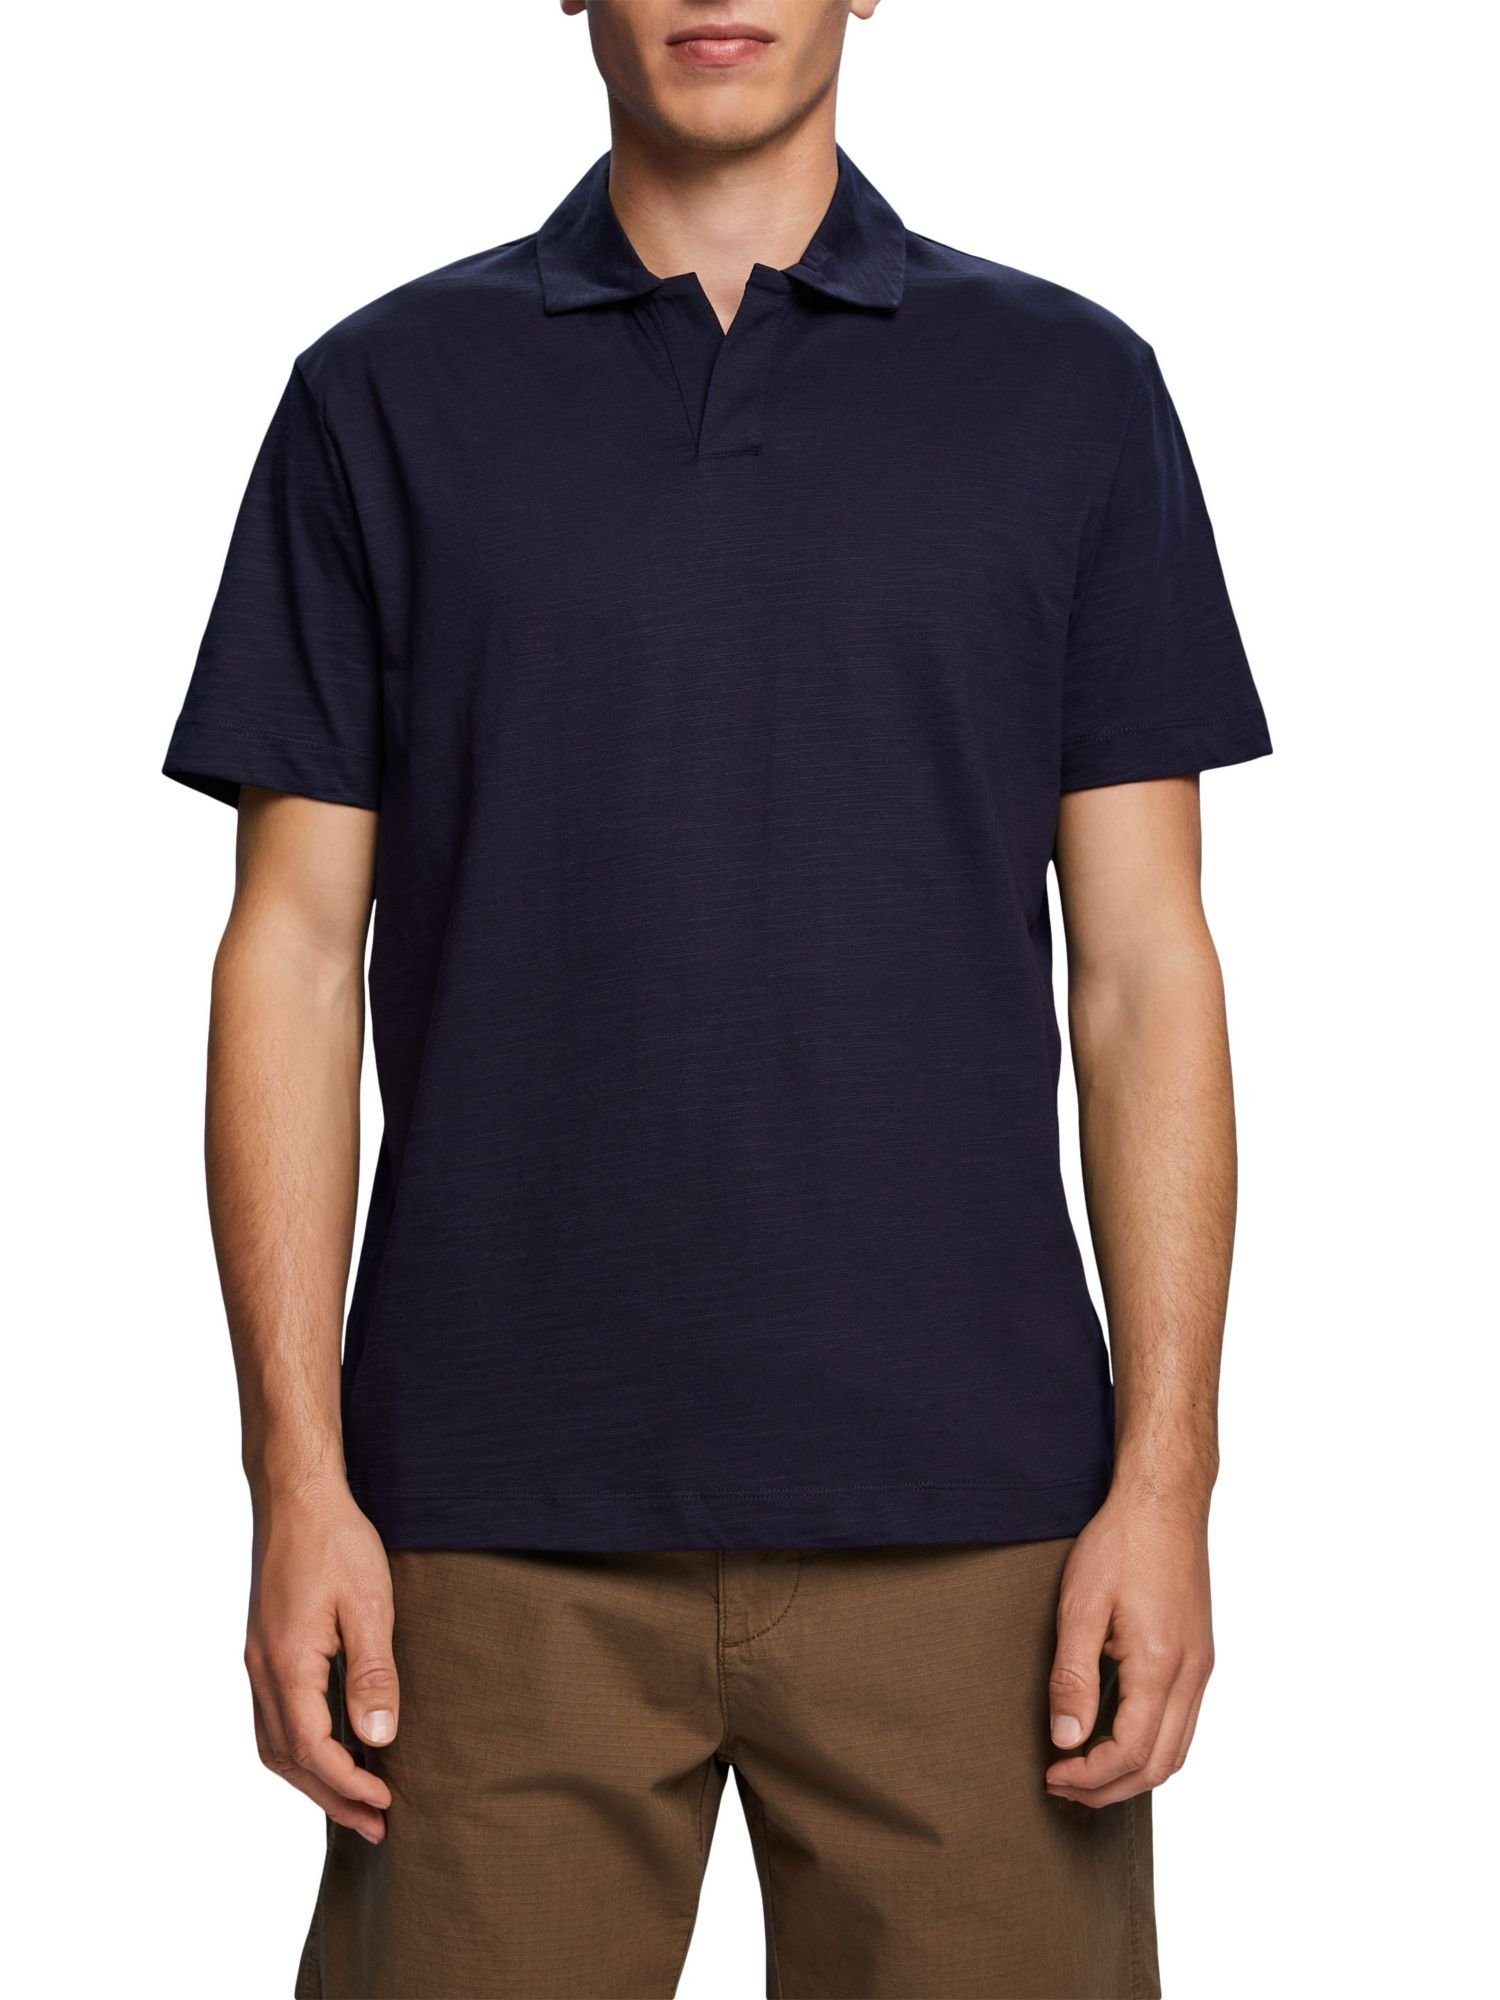 Poloshirt 100 aus NAVY Esprit Jersey, Poloshirt Collection Baumwolle %